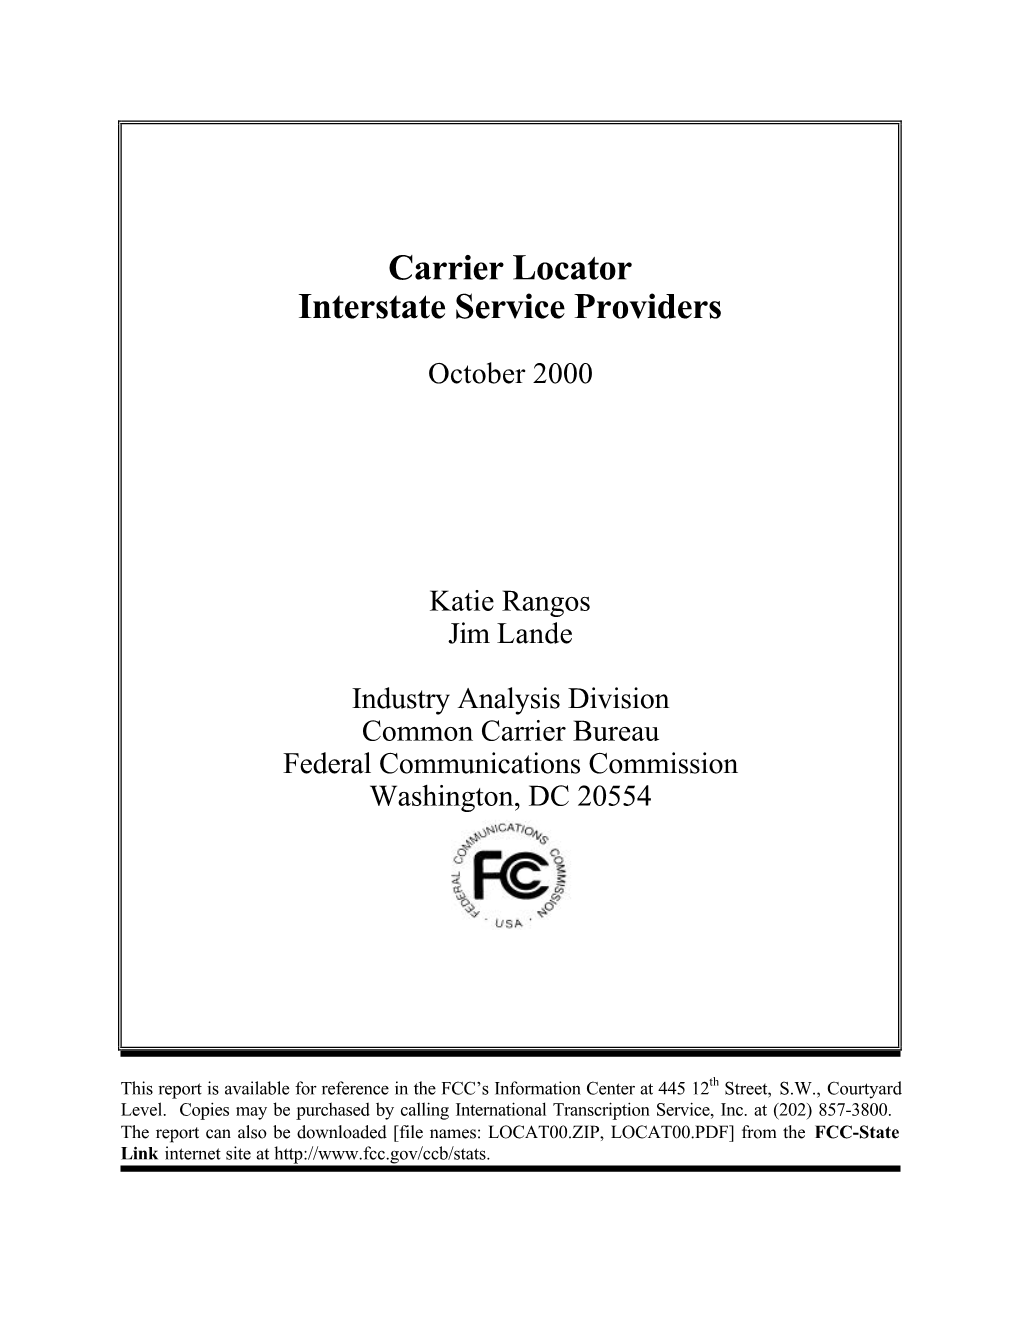 Carrier Locator Interstate Service Providers